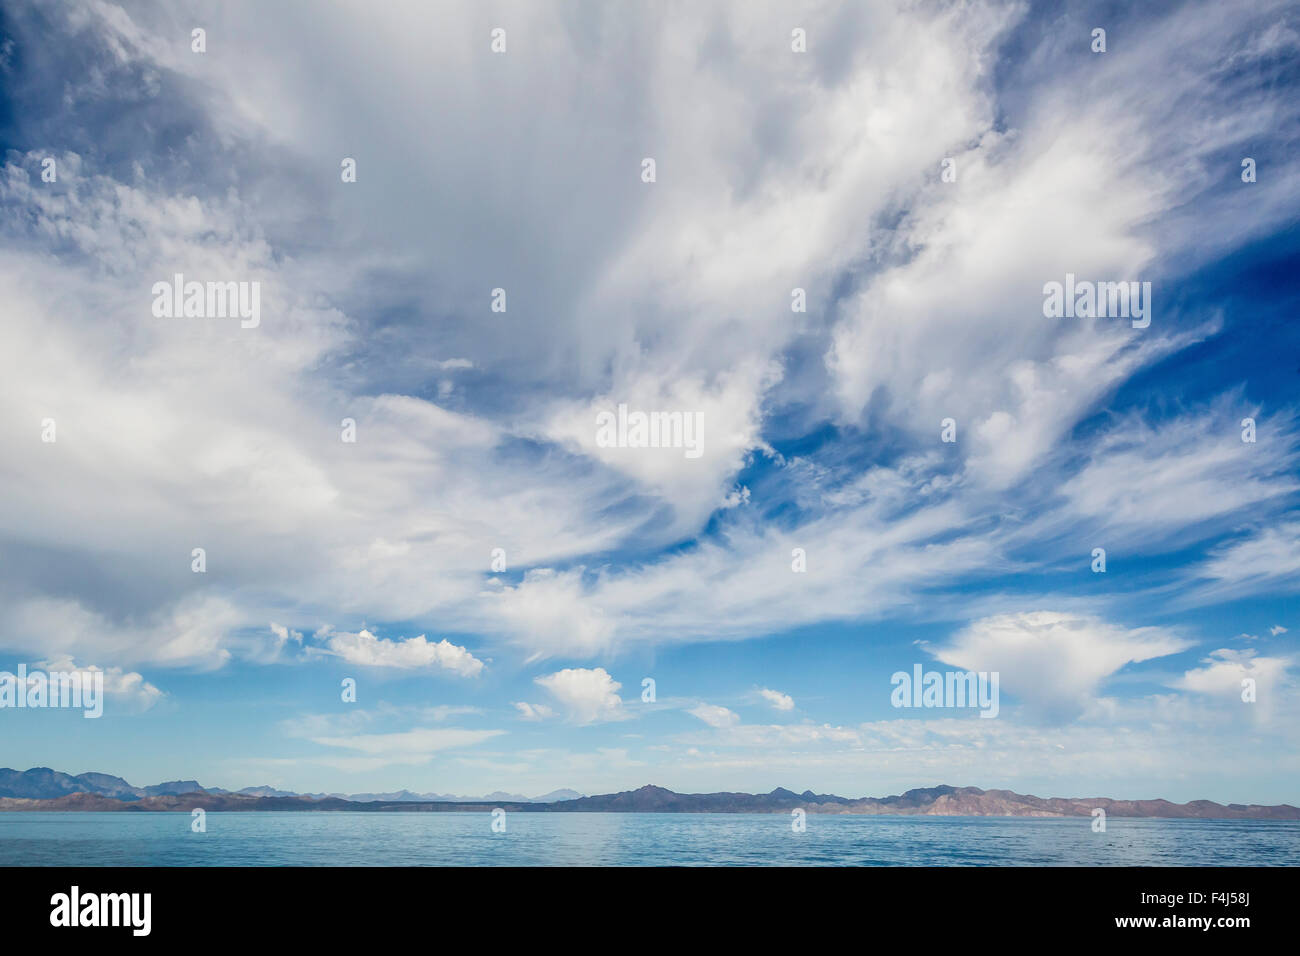 Intense cloud build up over Isla Santa Catalina, Baja California Sur, Mexico, North America Stock Photo